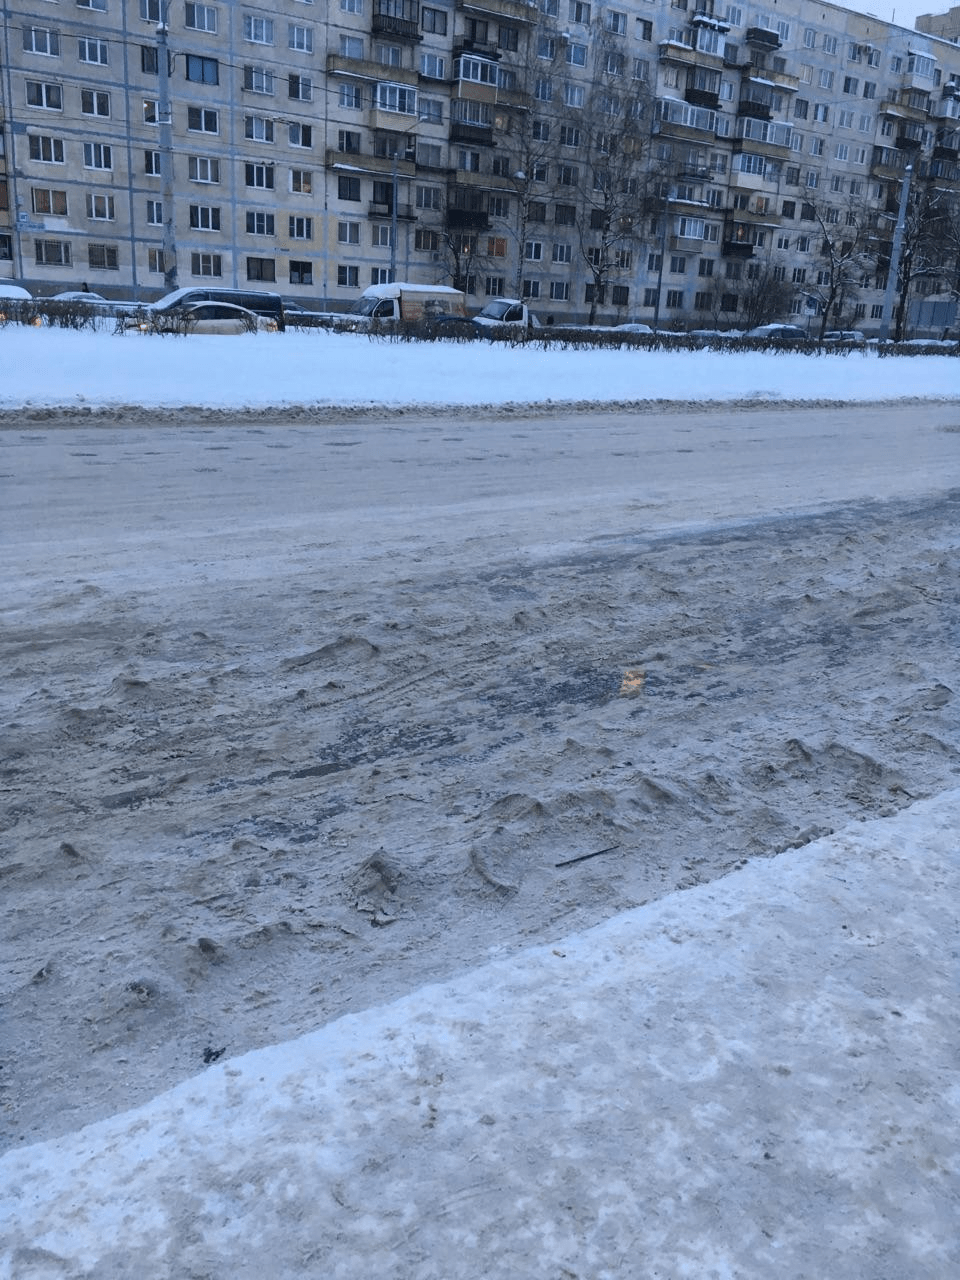 жалобы петербуржцев на неубранный снег